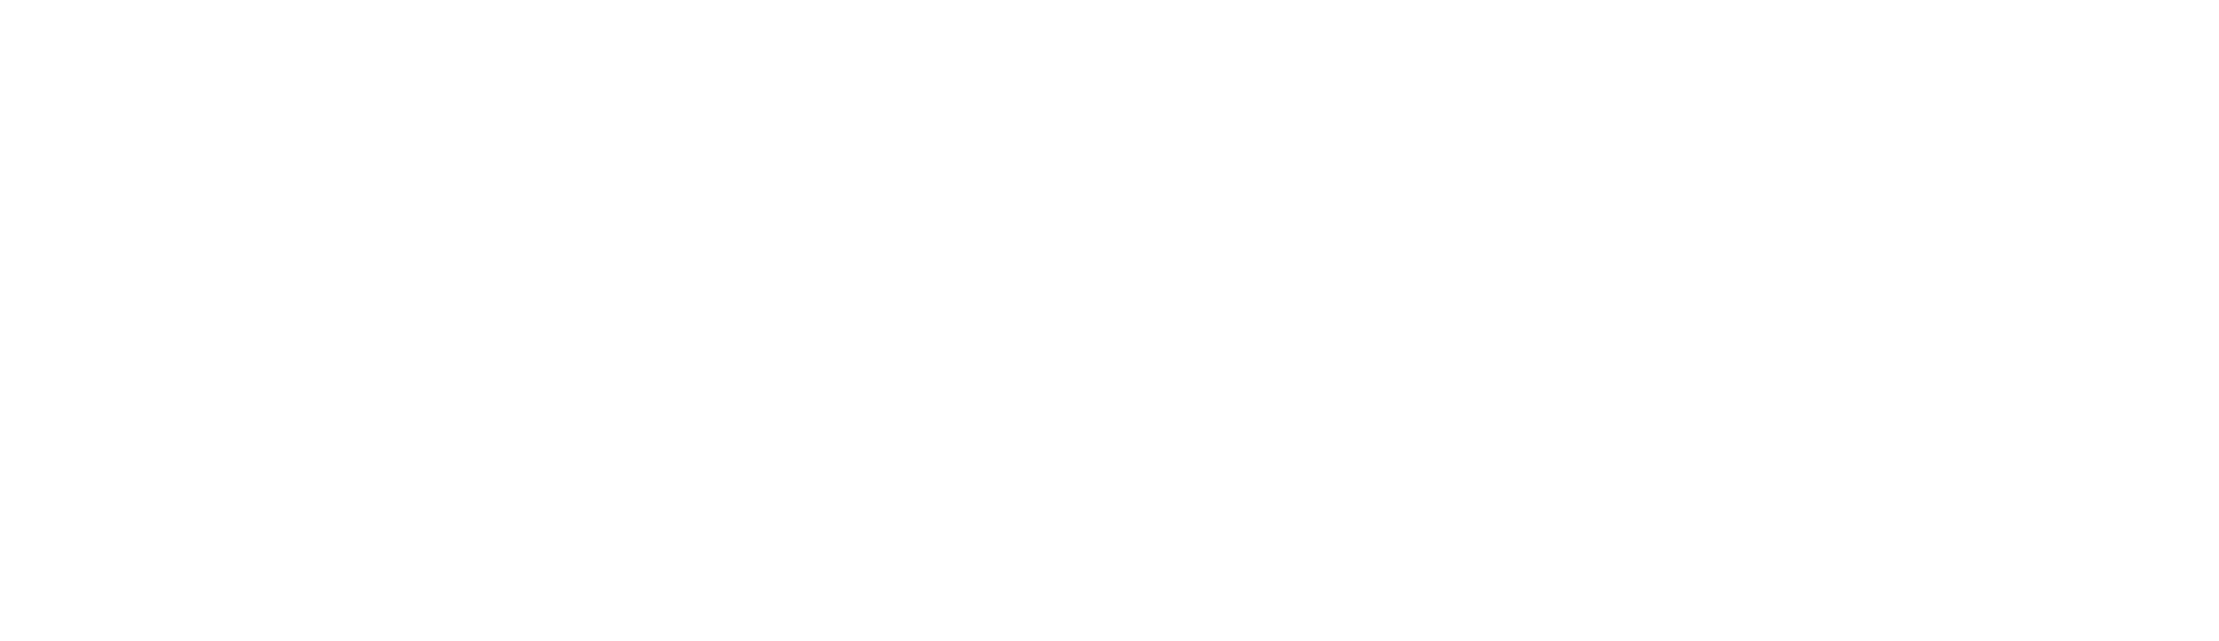 The Commercial Company Board logo